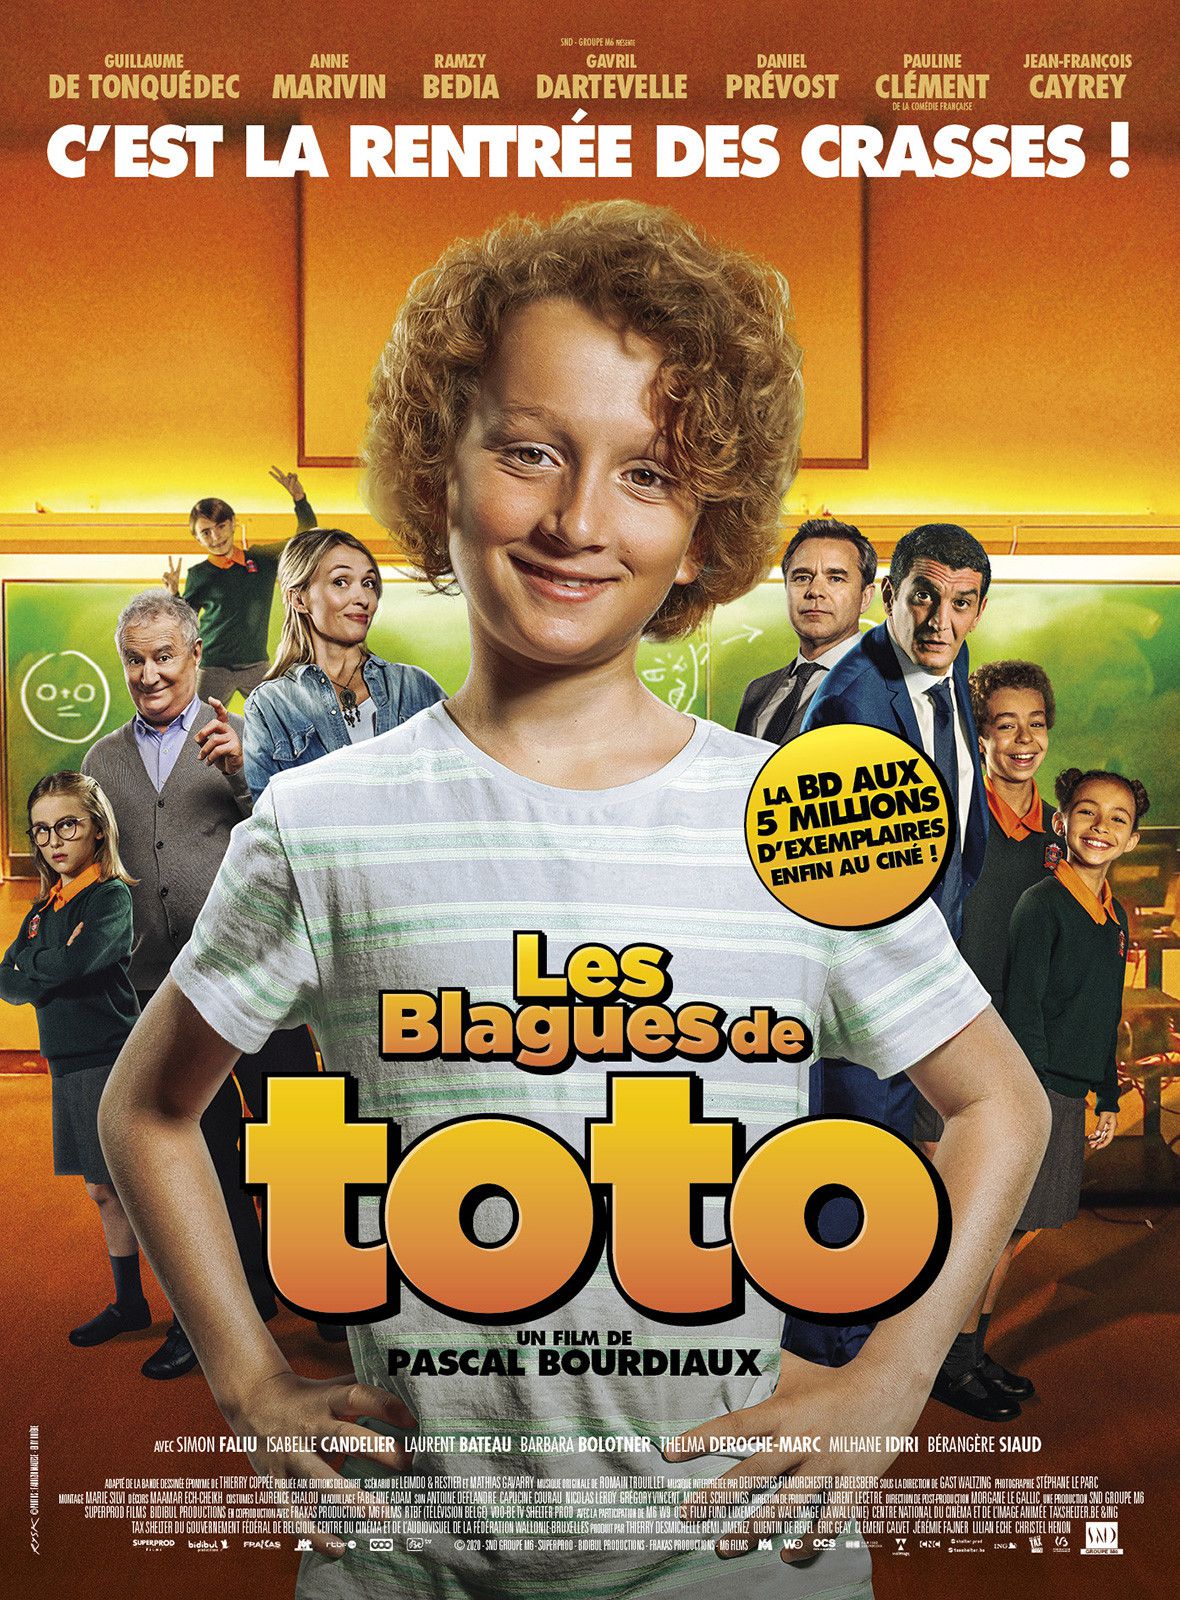 Les Blagues de Toto - Film (2020) streaming VF gratuit complet